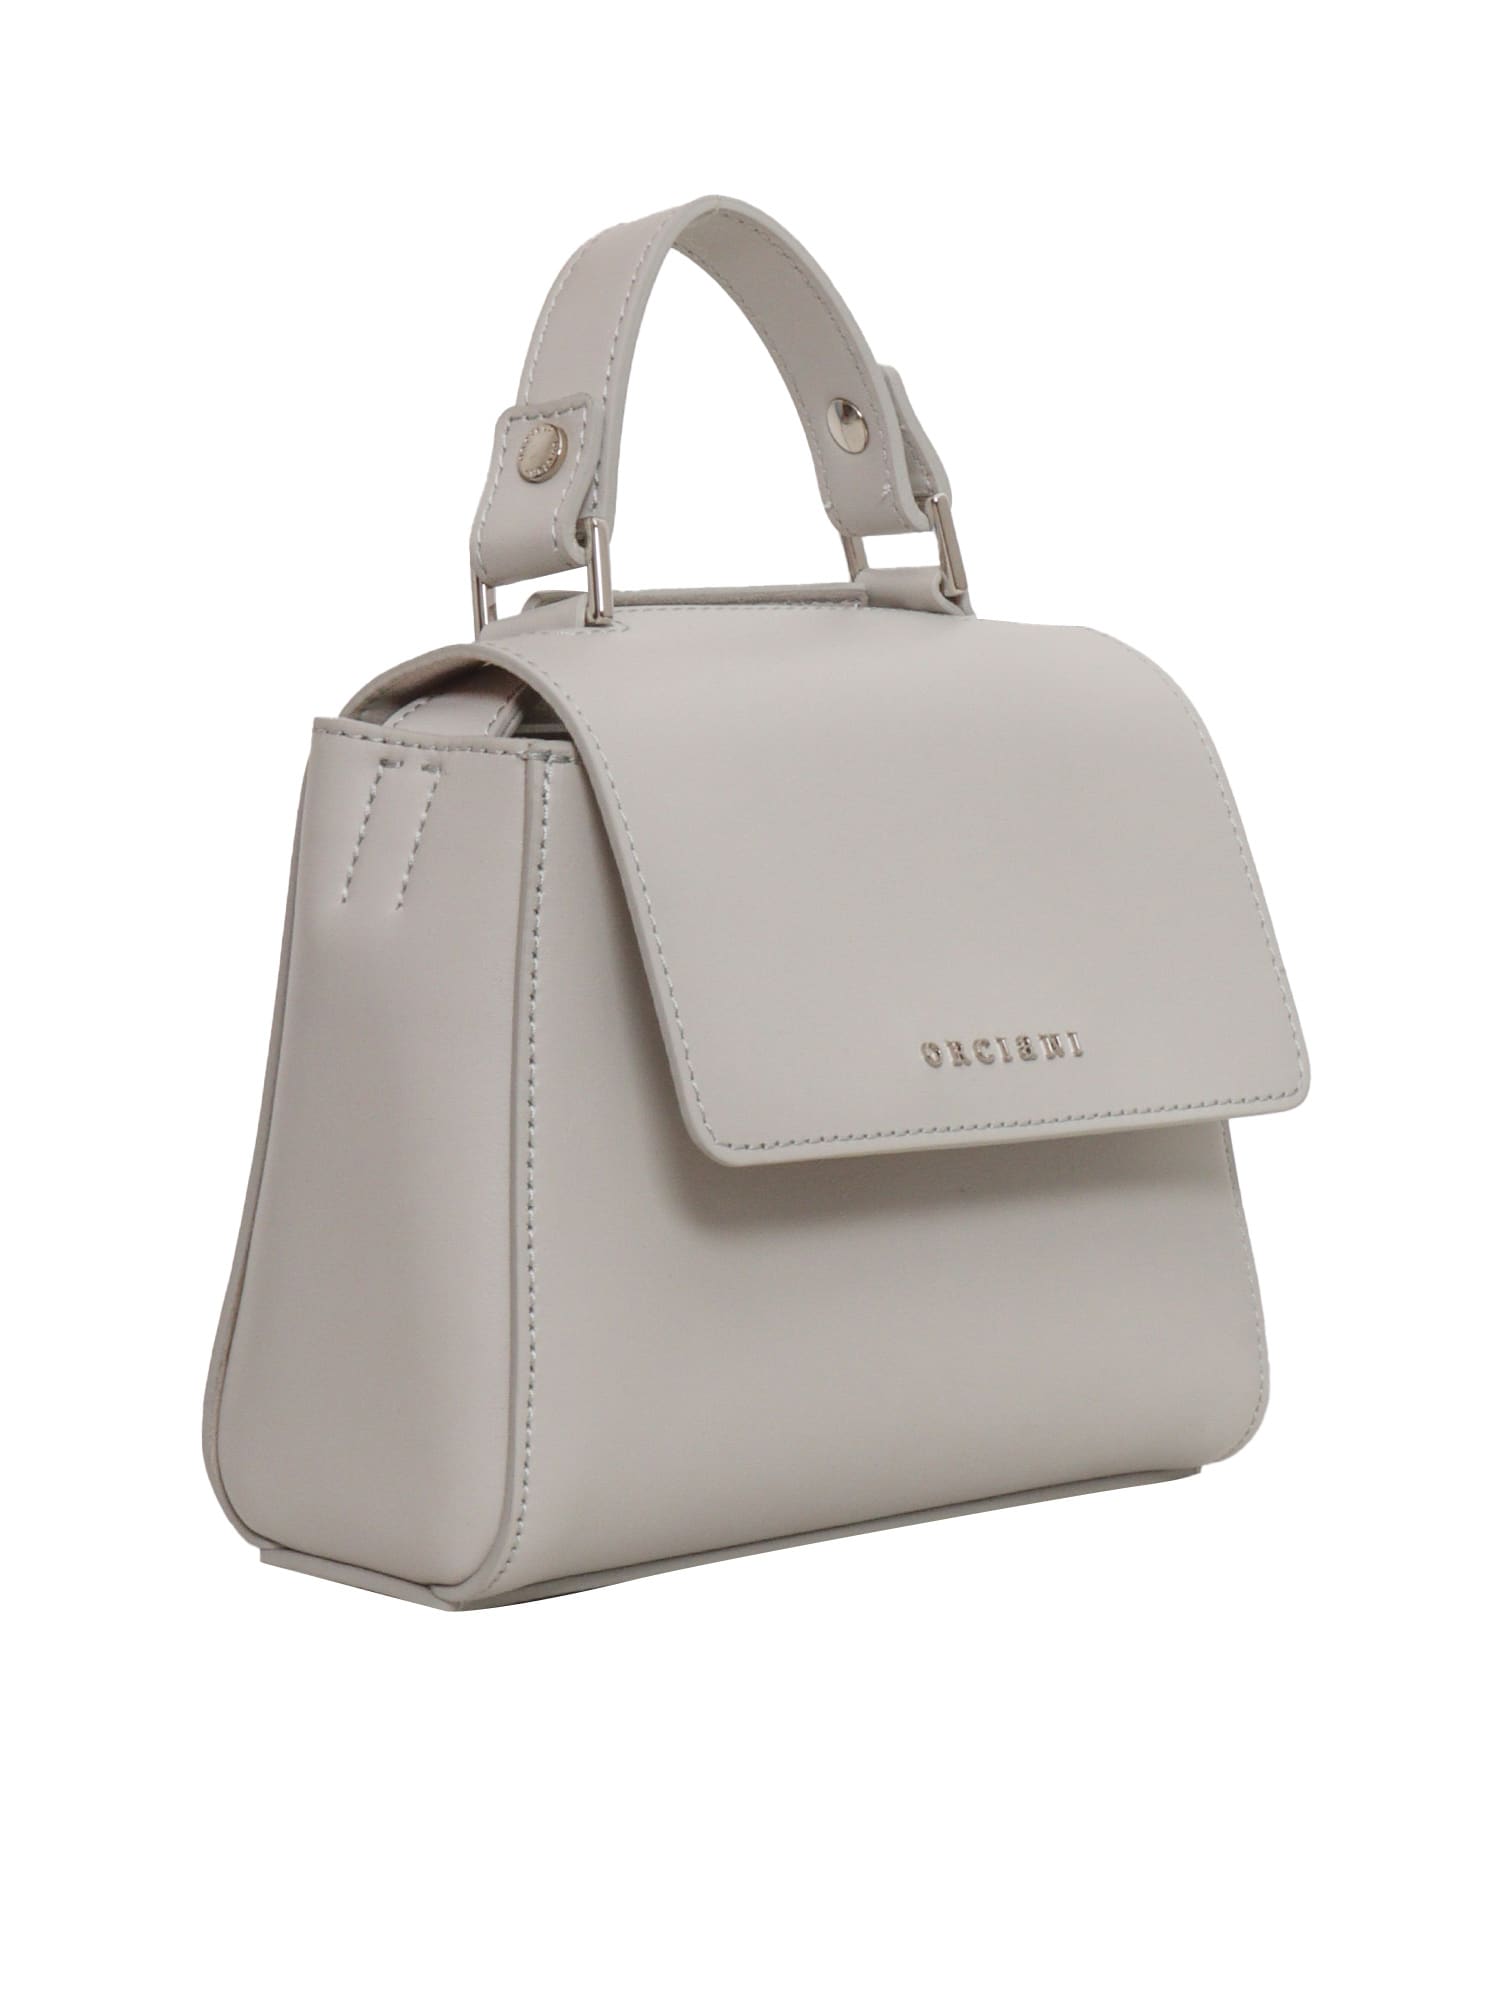 Shop Orciani Grey Handbag In White